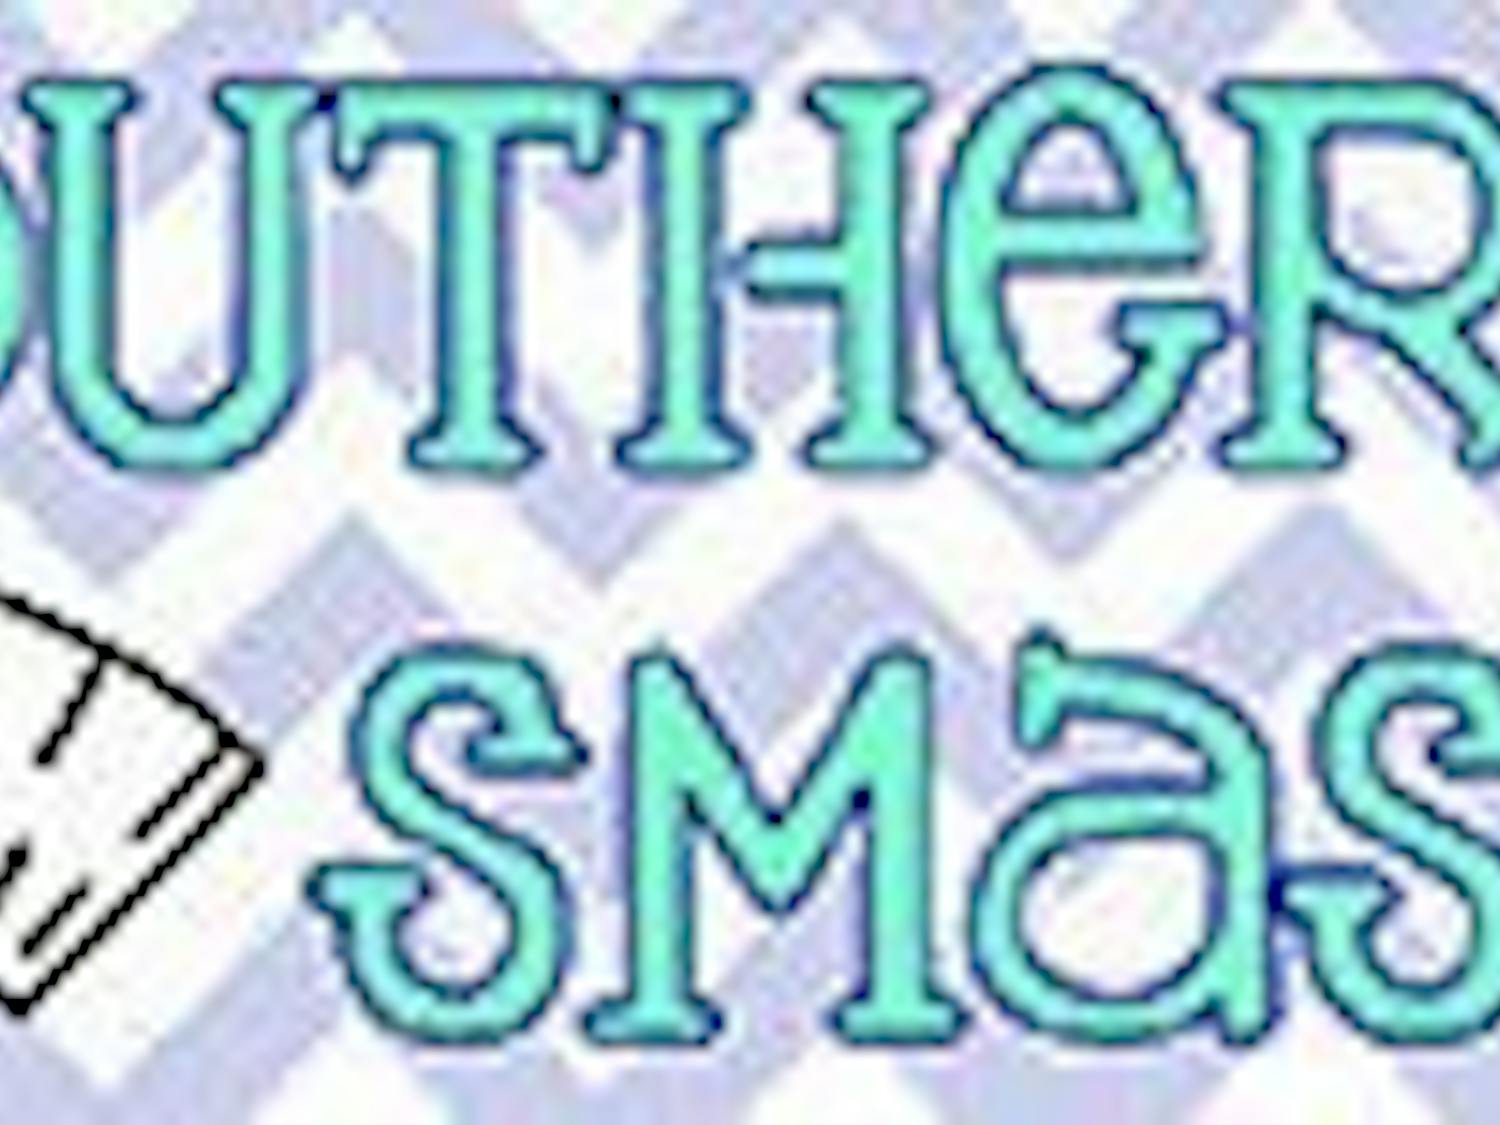 Southern Smash Auburn - good